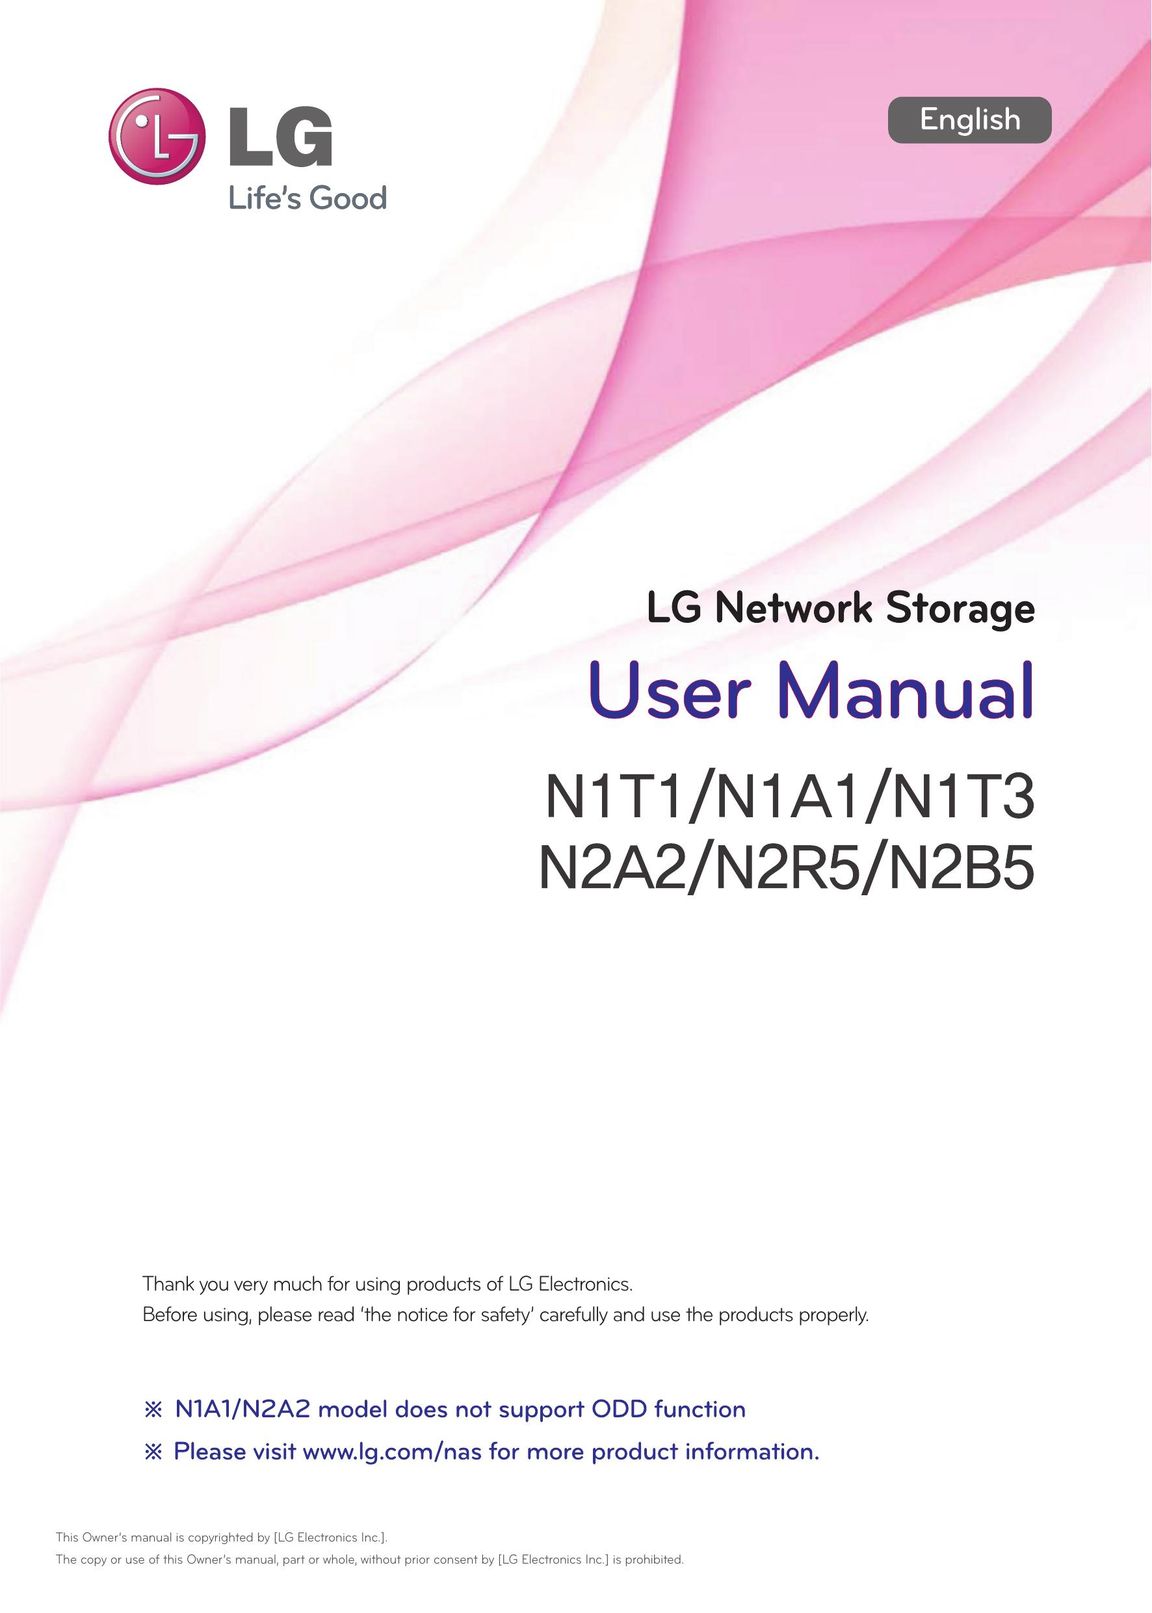 LG Electronics N2B5 Network Hardware User Manual